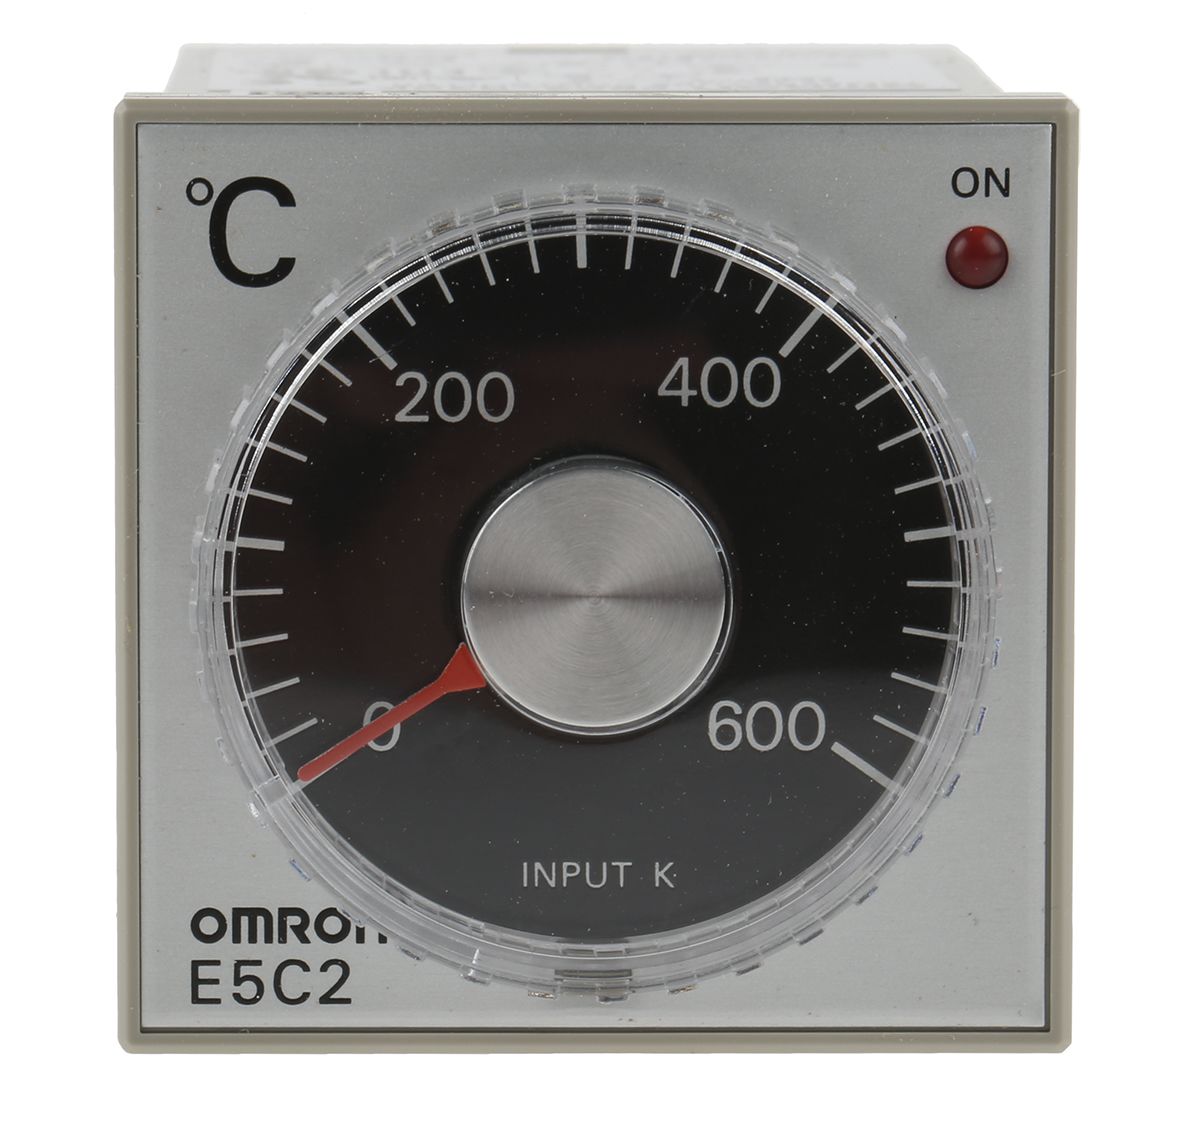 E5c2 R20k Ac100 240 0 600 Omron E5c2 Onoff Temperature Controller